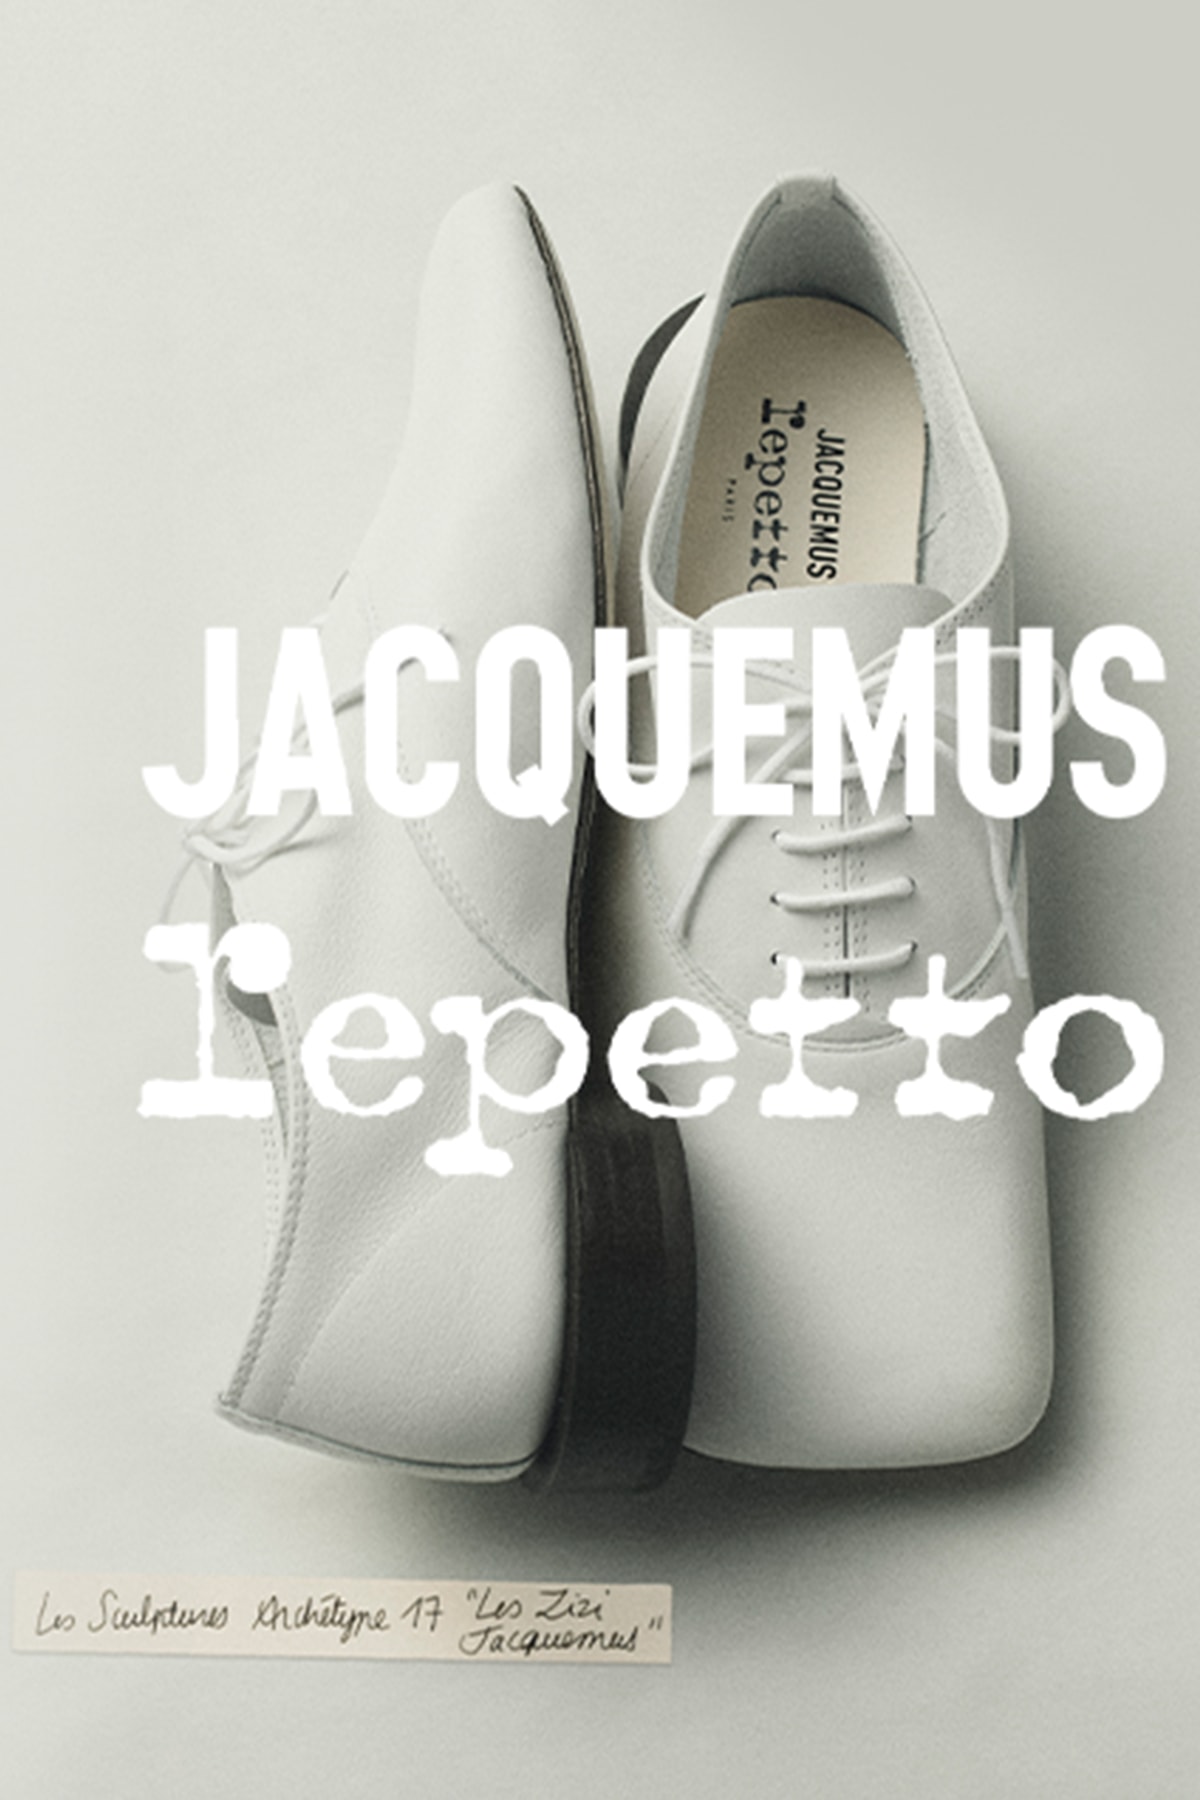 Jacquemus x Repetto 全新聯名鞋款正式登場